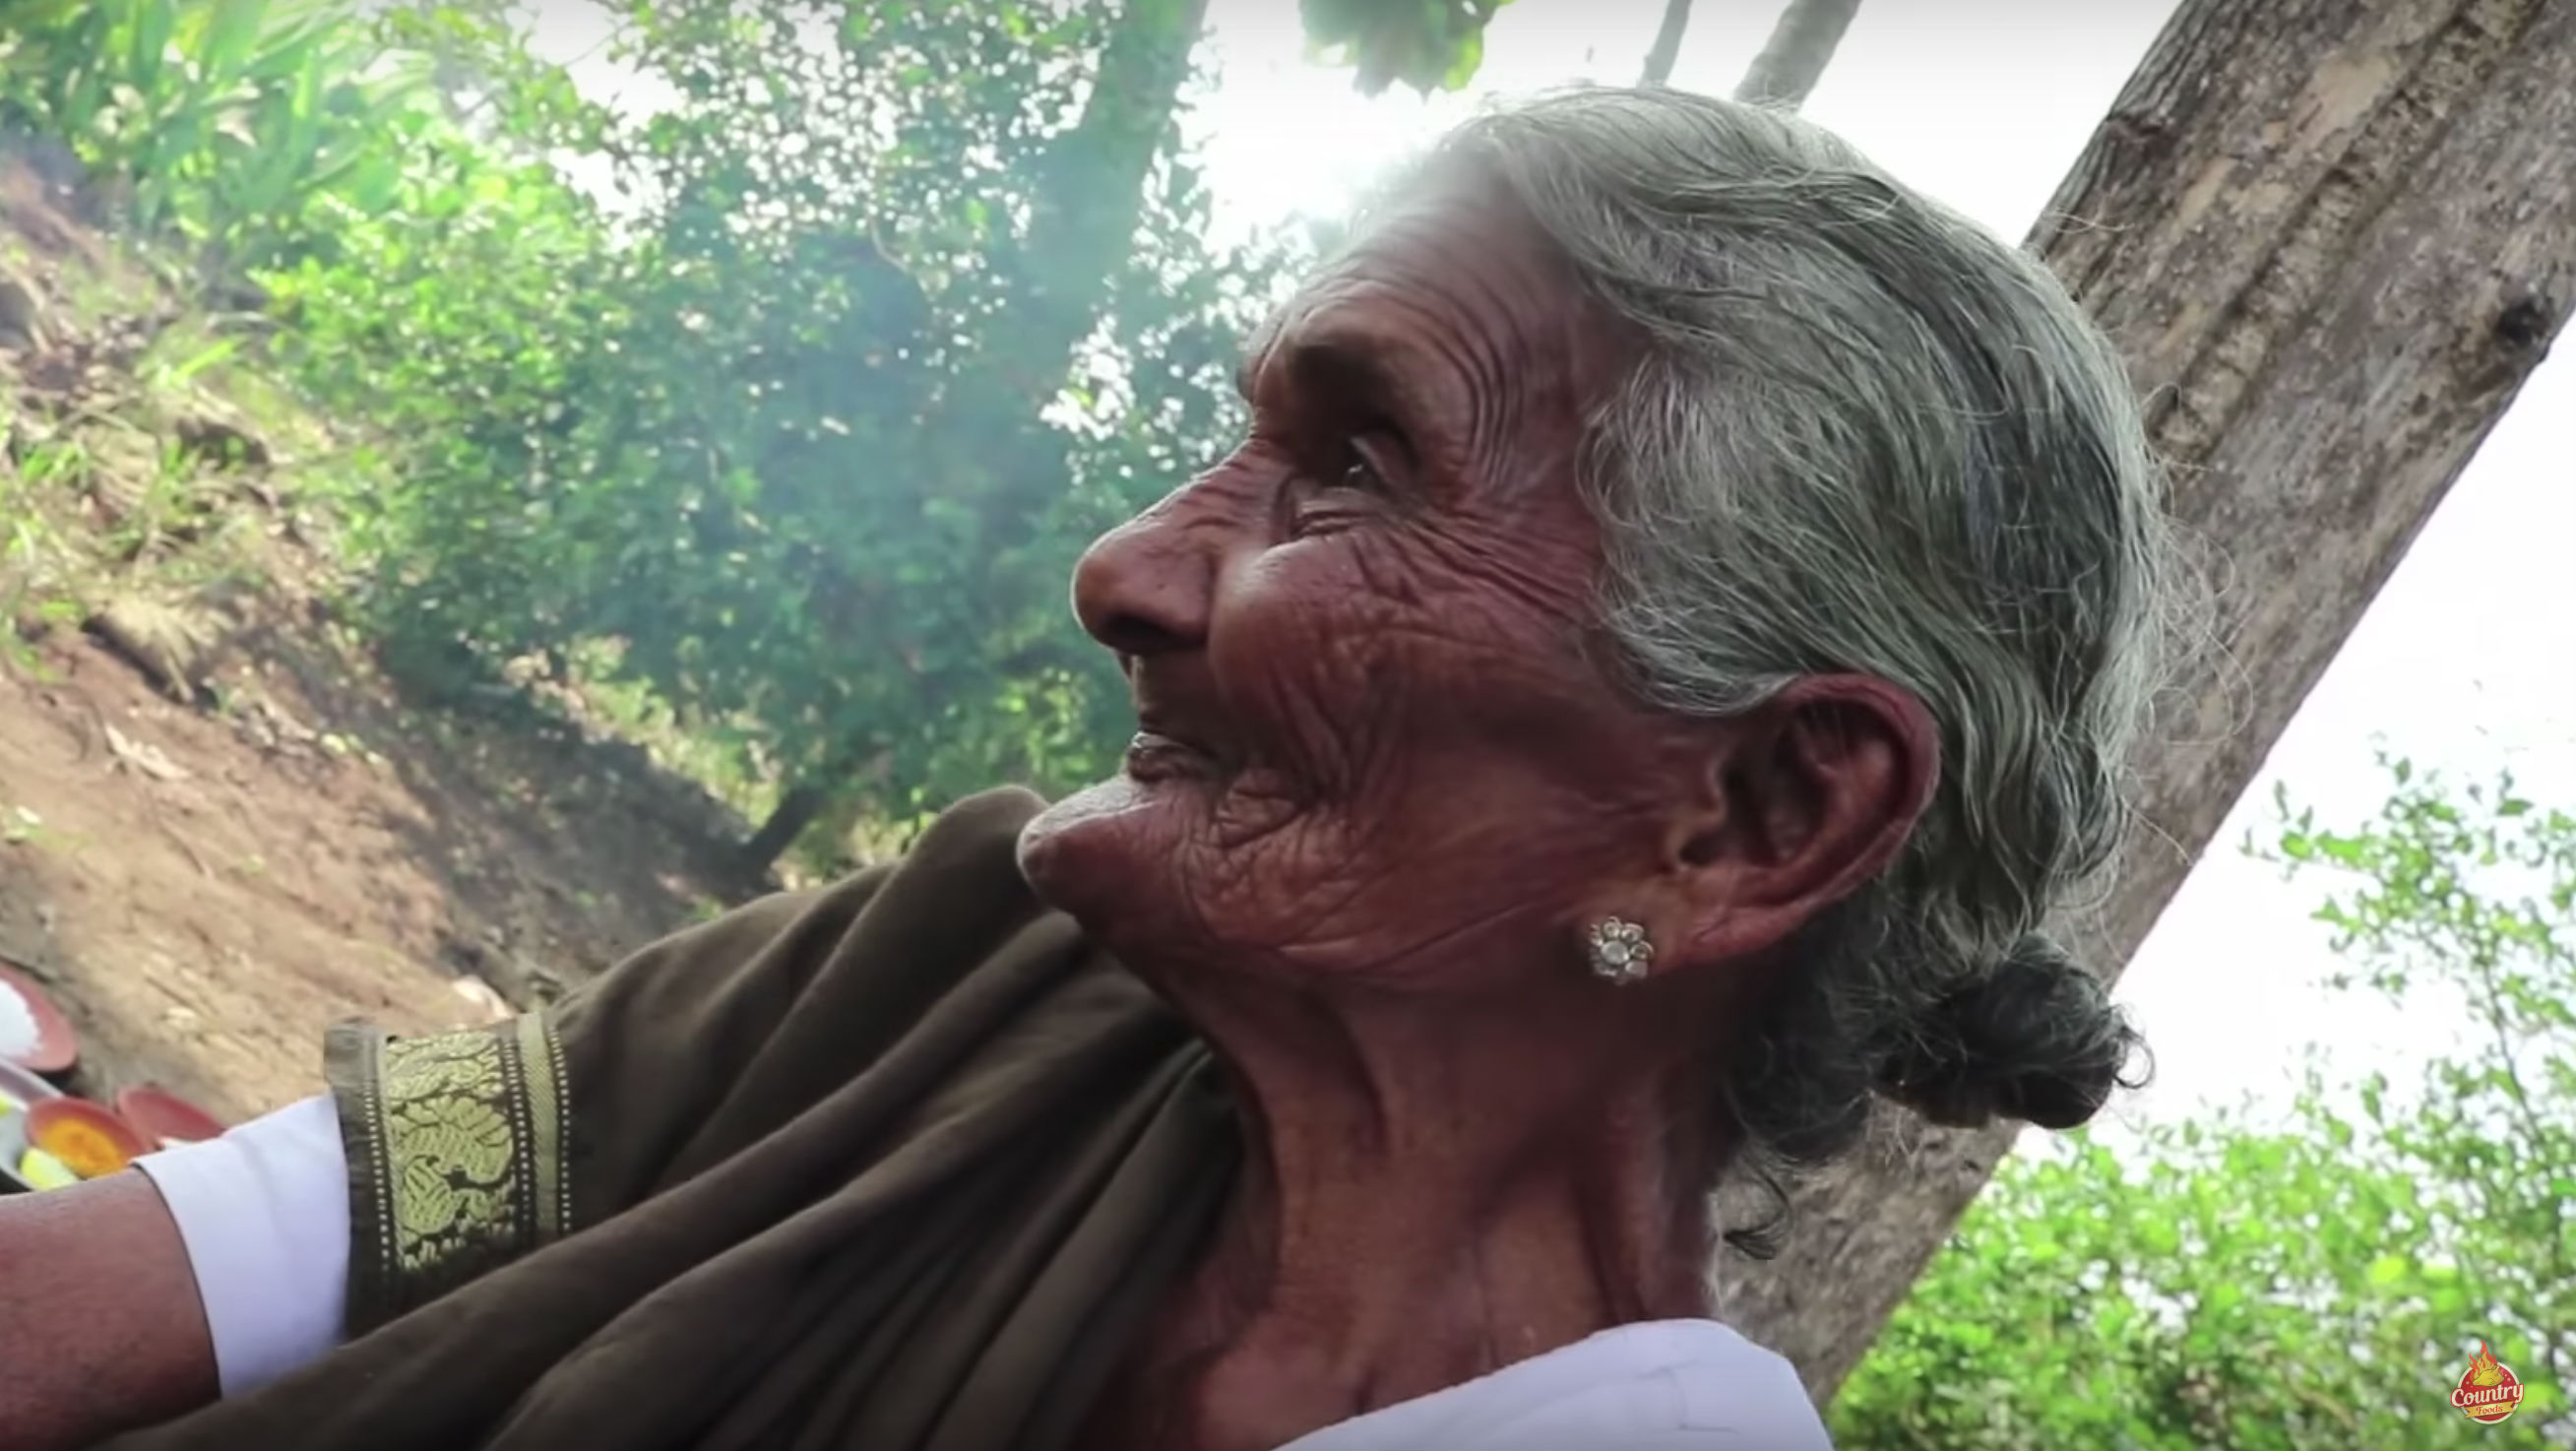 Mastanamma Indian Youtube Sensation Dies Aged 107 The Week